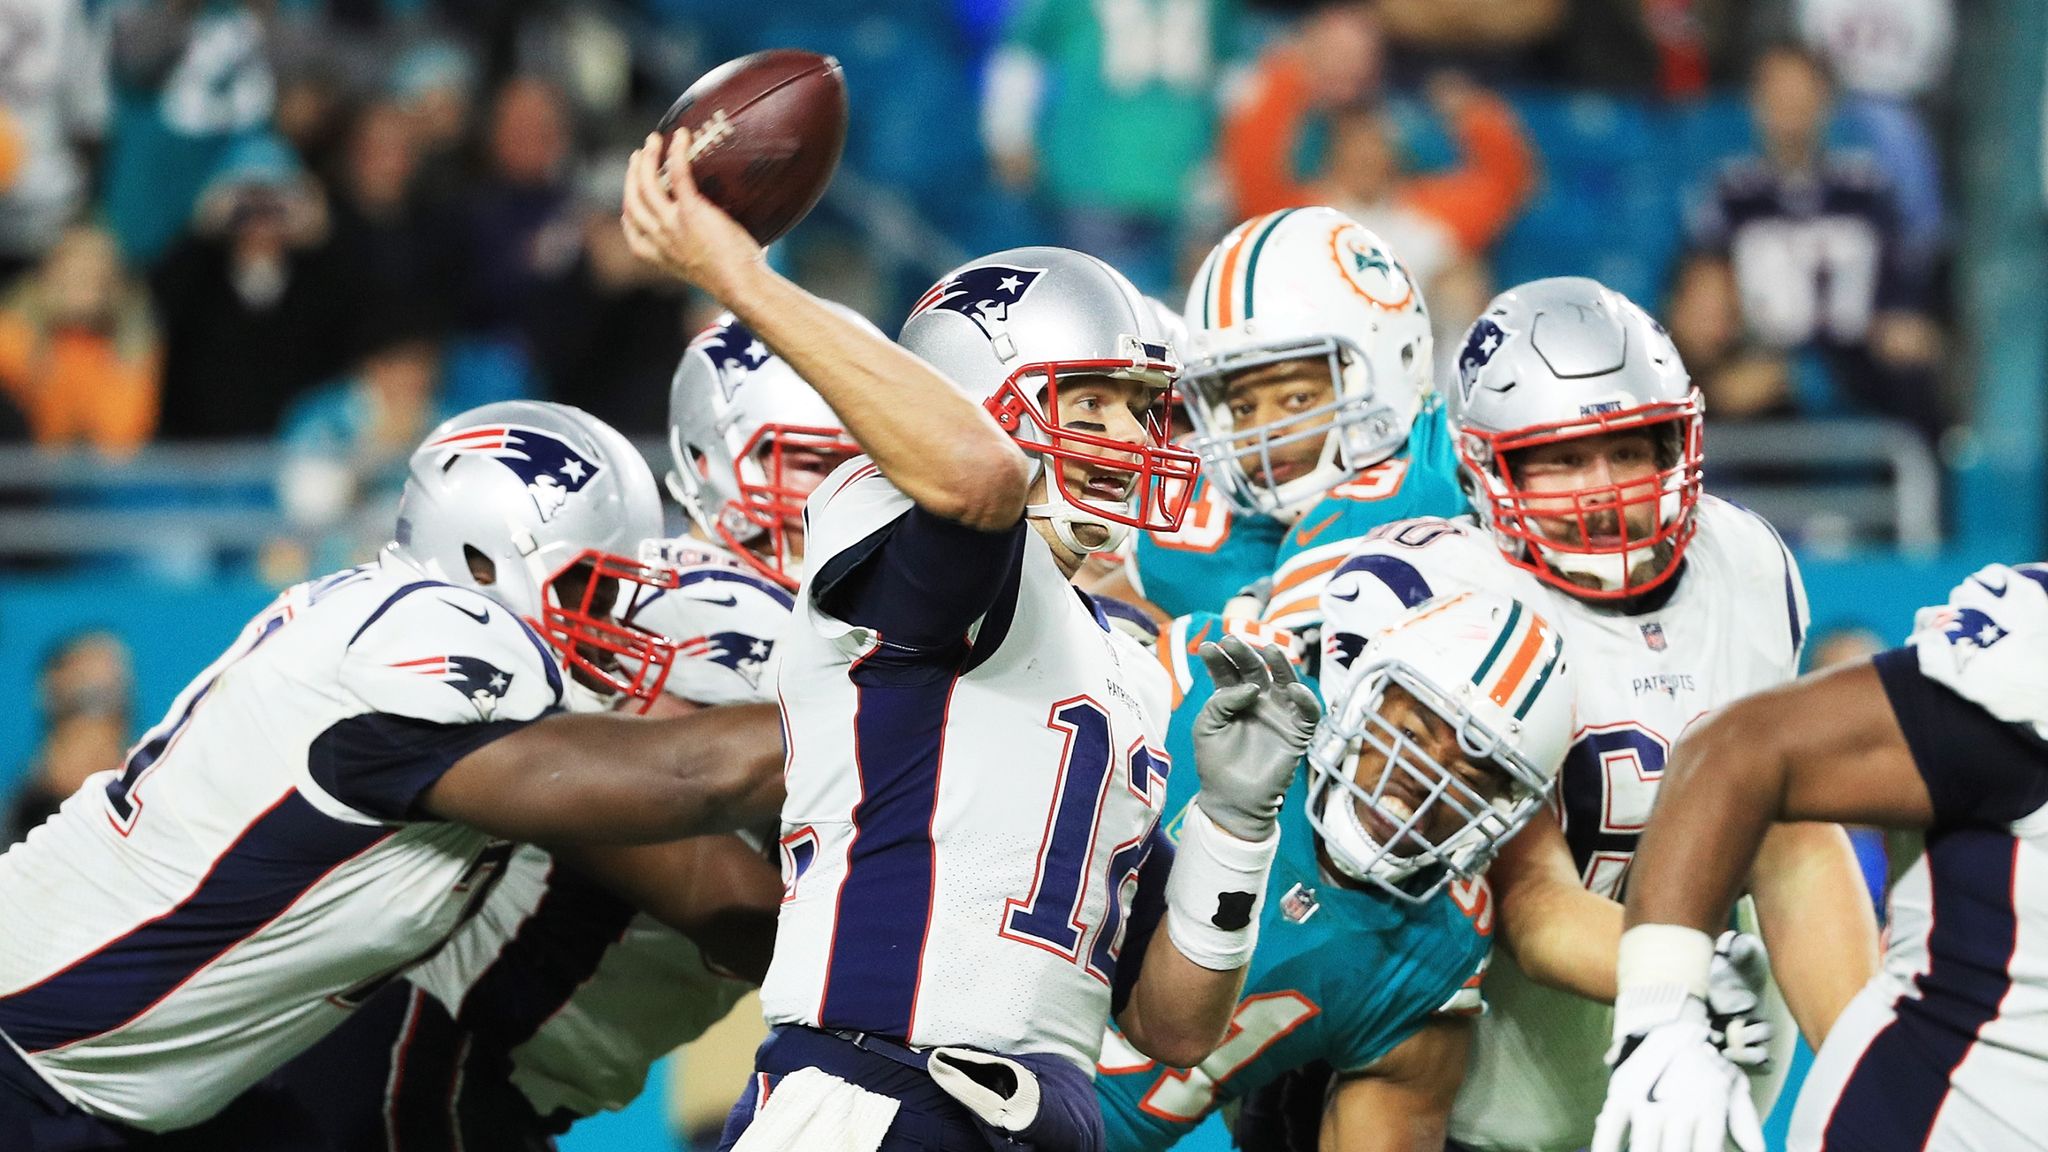 New England Patriots 20-27 Miami Dolphins: Tom Brady has off night